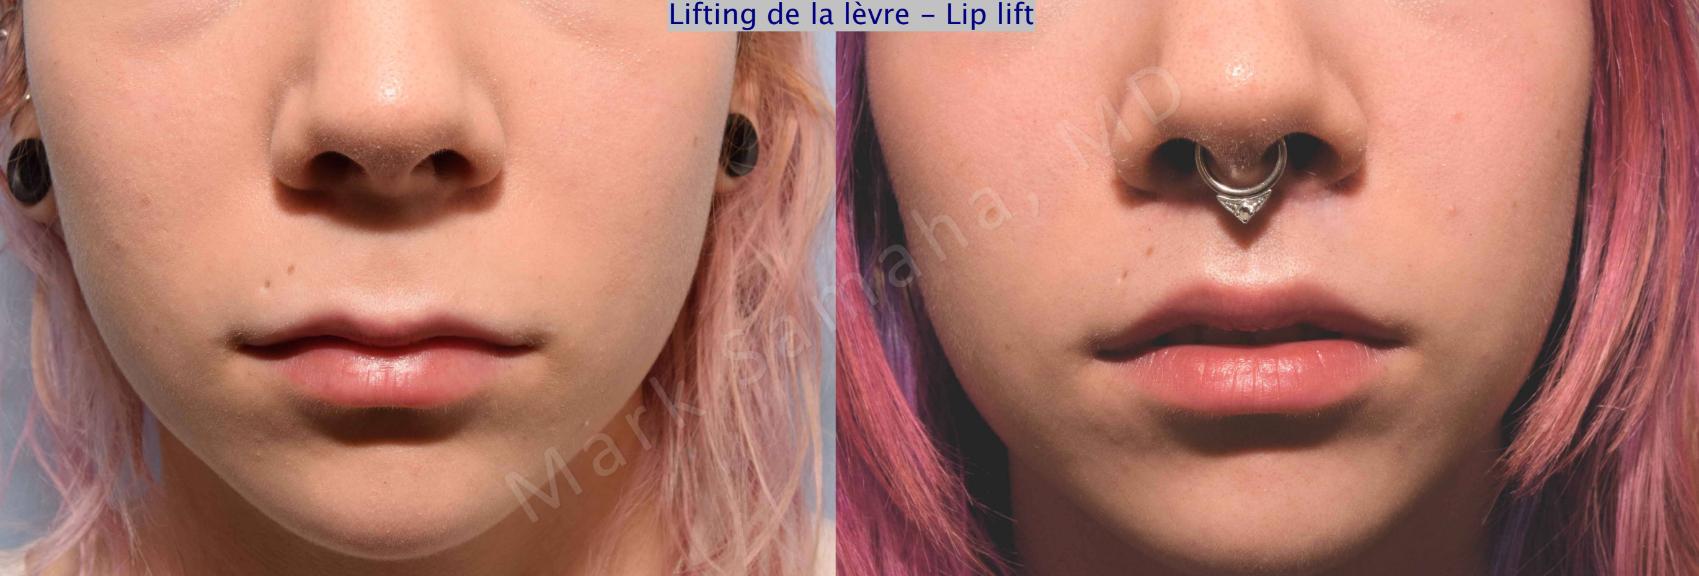 Before & After Lifting de la lèvre supérieure / Lip Lift  Case 71 View #1 View in Montreal, QC